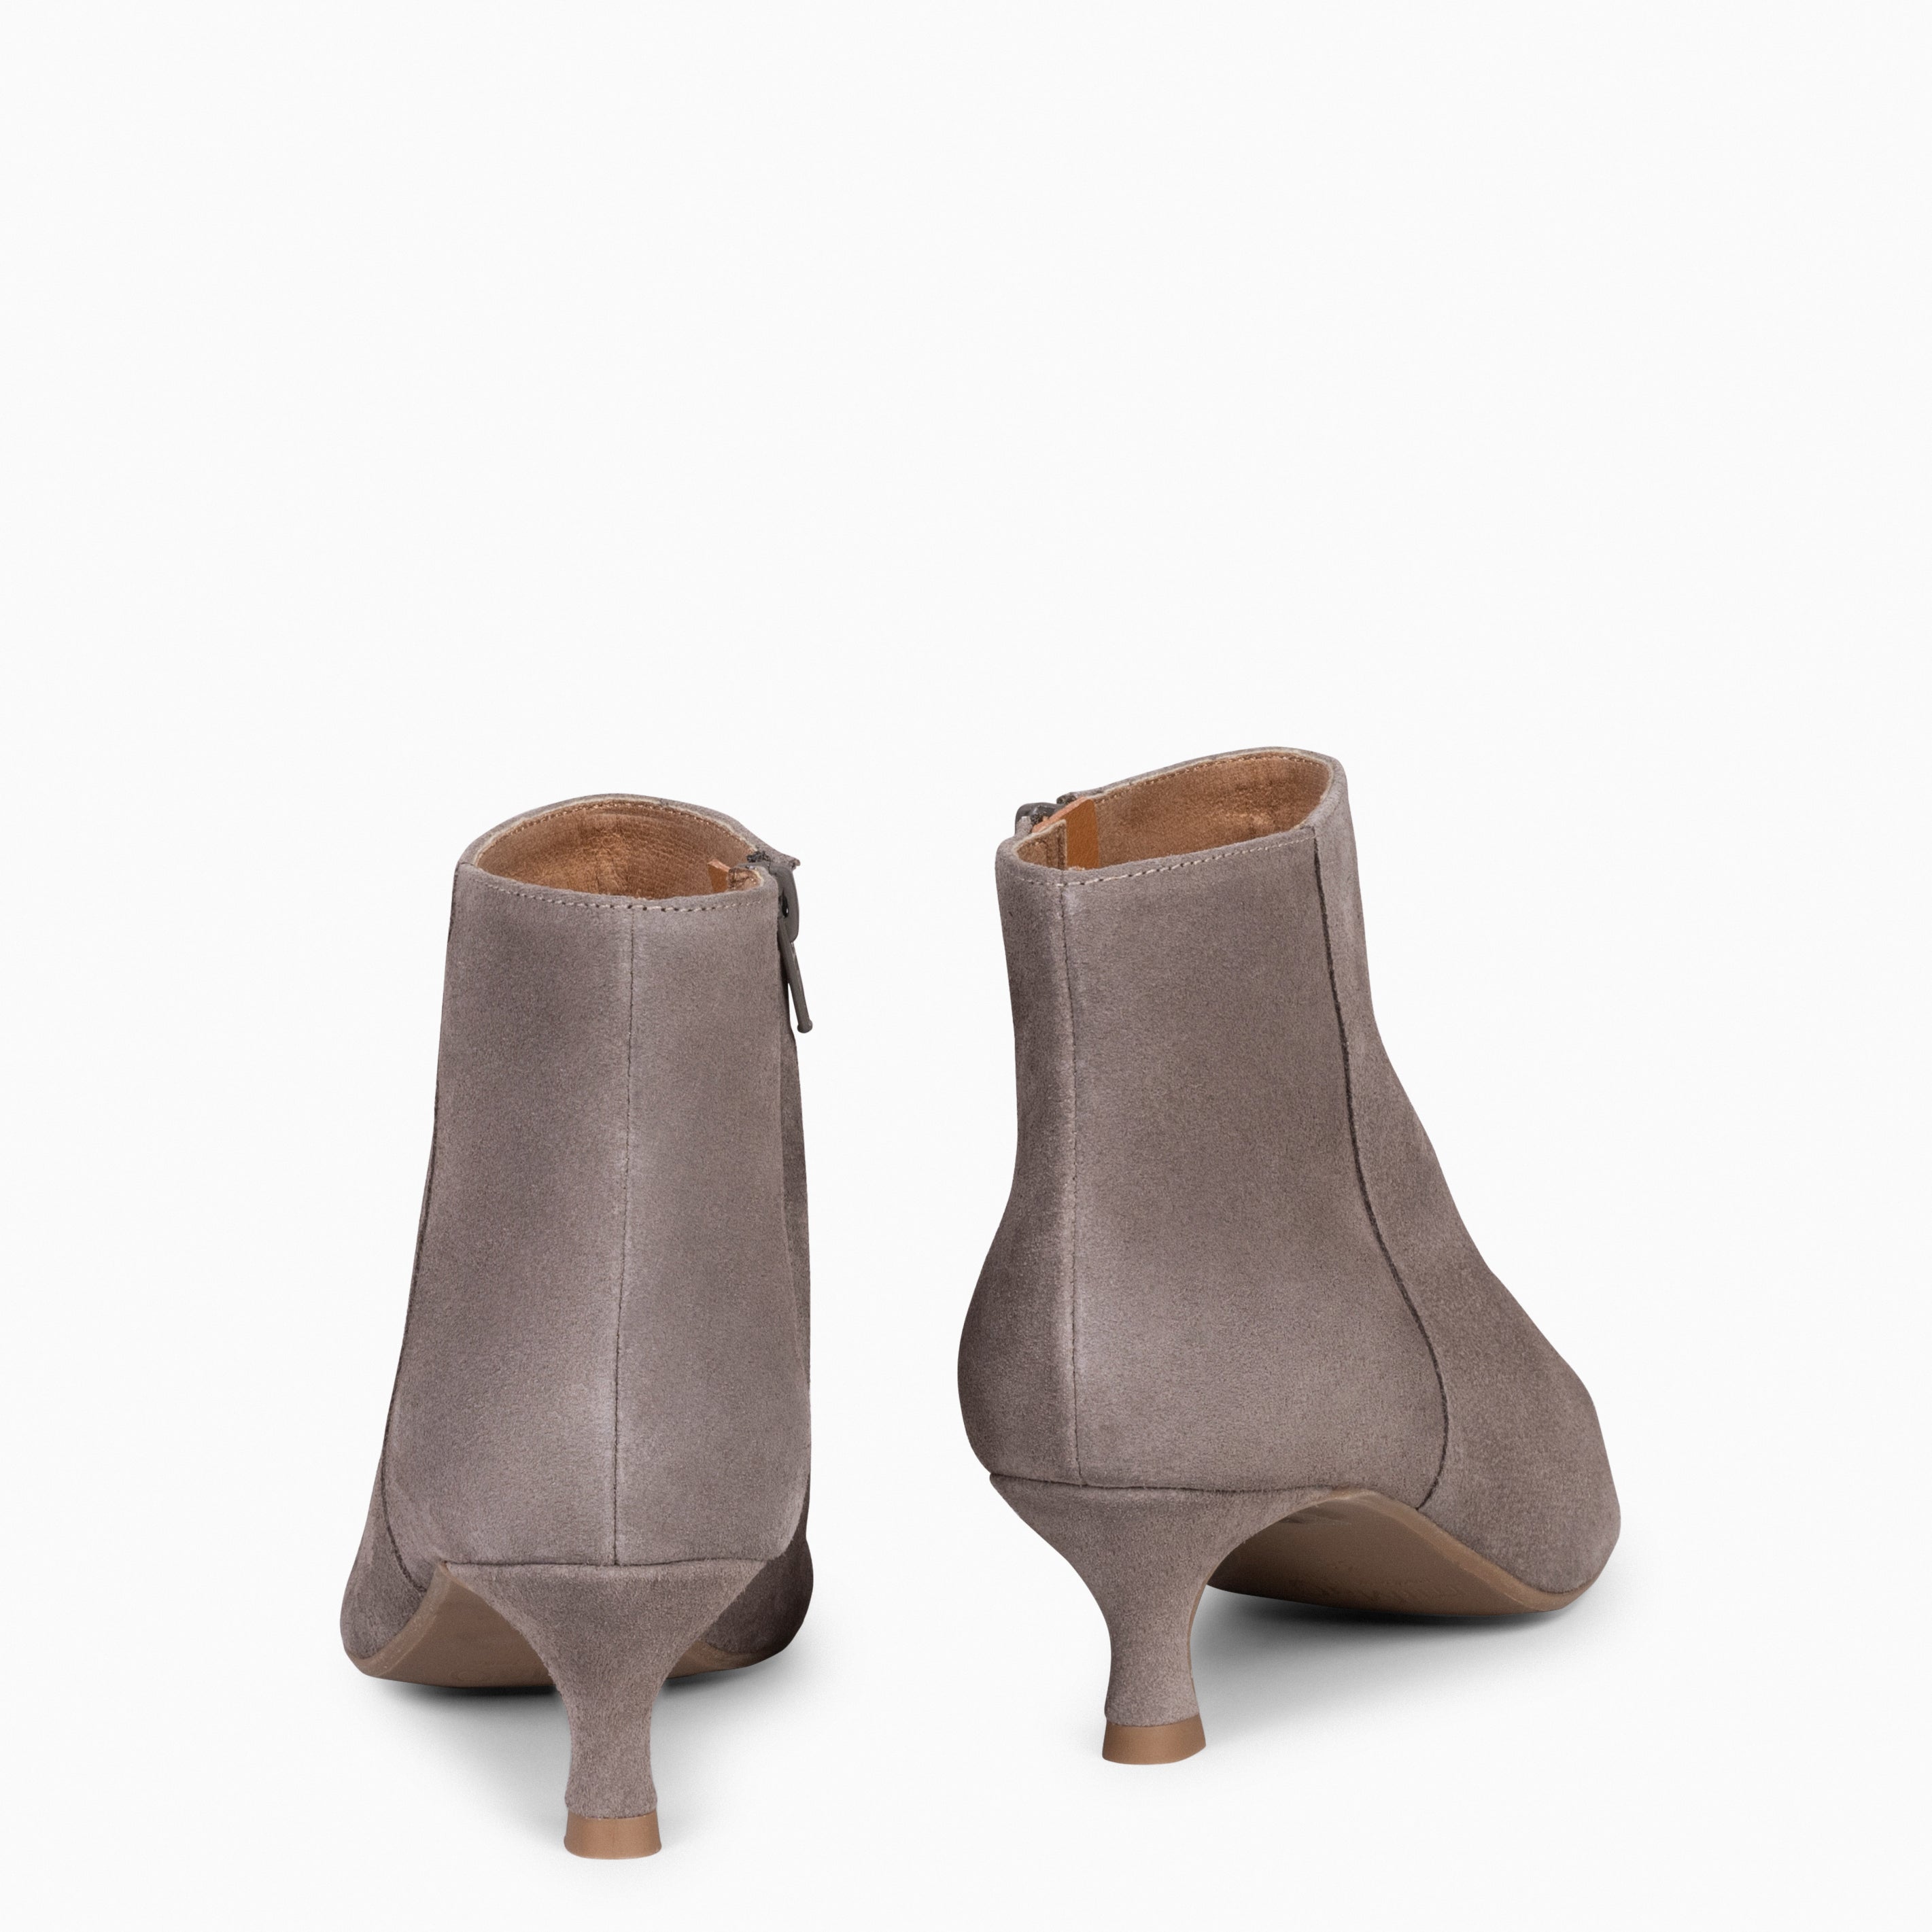 ROYAL SUEDE – TAUPE Low heel booties